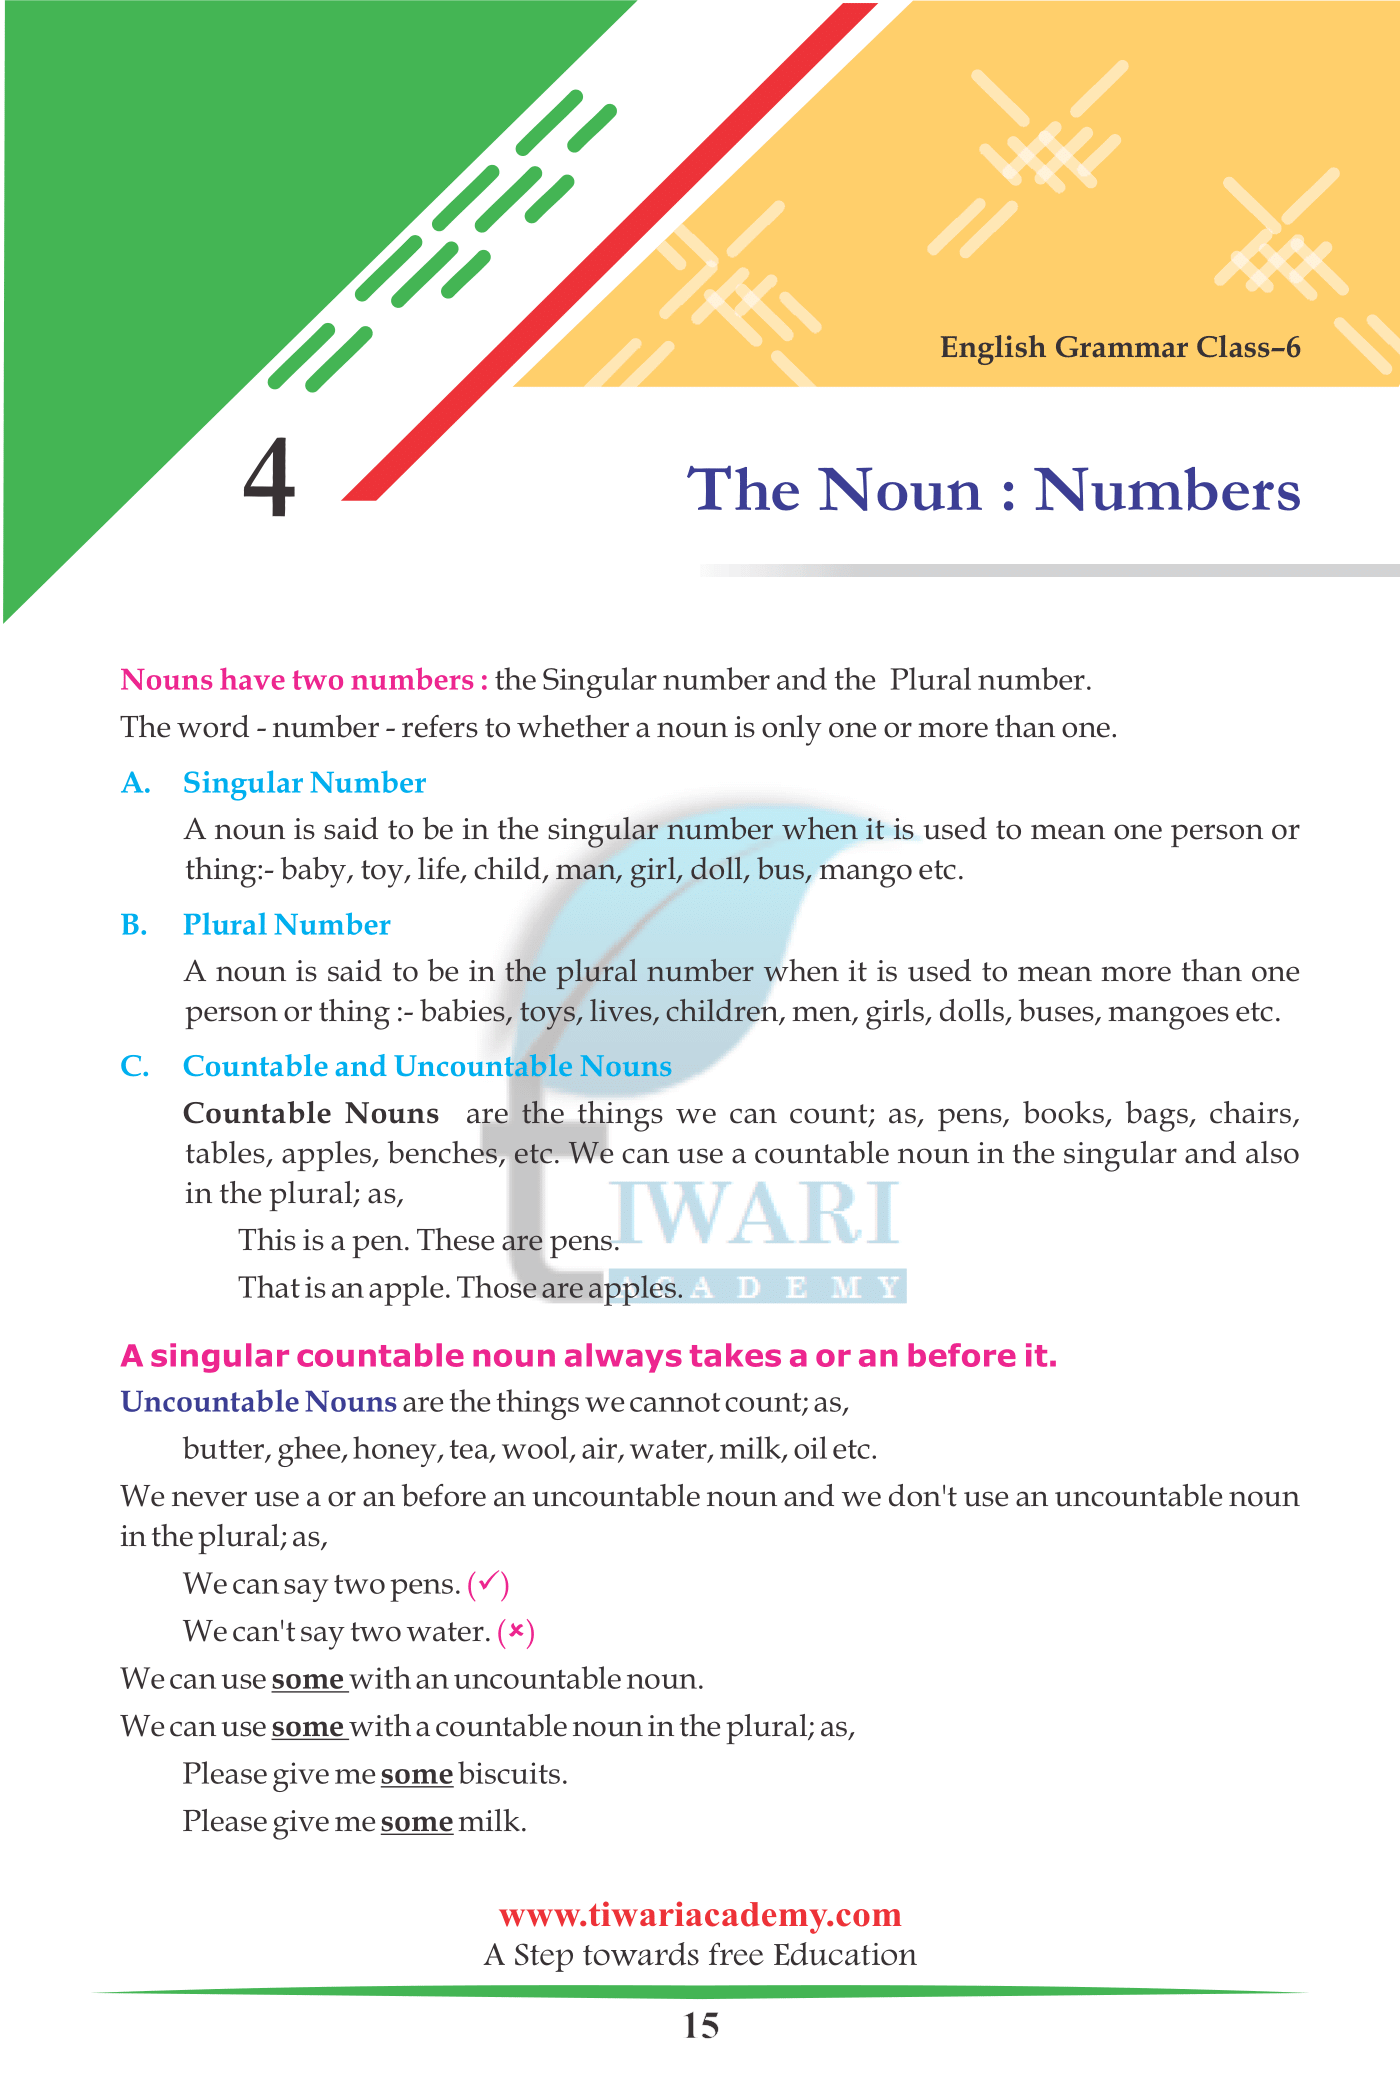 Class 6 English Grammar Chapter 4: The Noun - Numbers